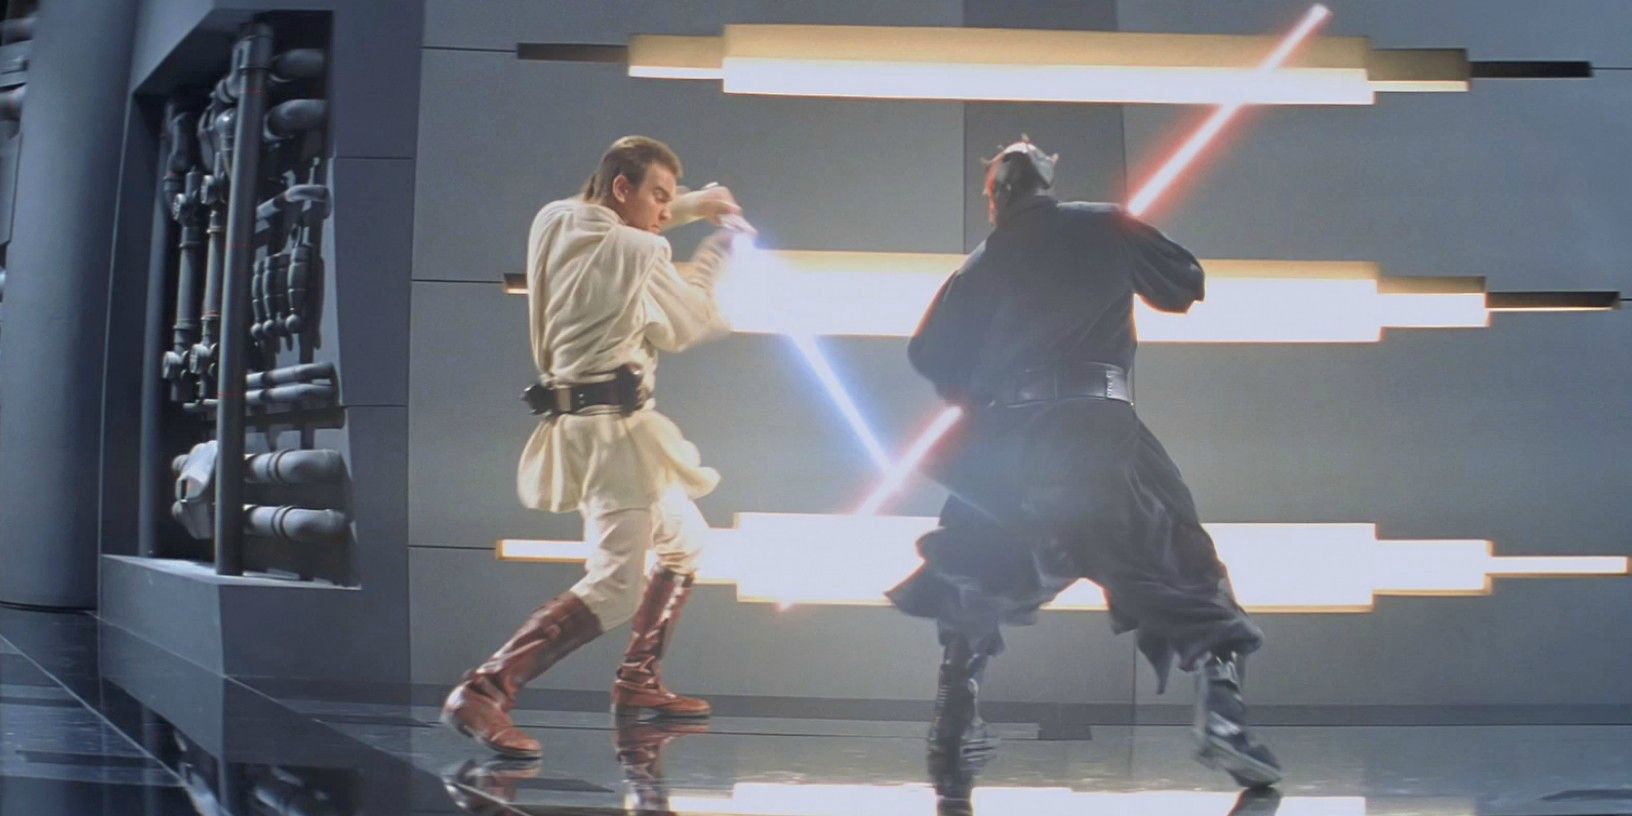 Obi Wan Kenobi fighting Darth Maul after he kills Qui-Gon Jinn in Phantom Menace